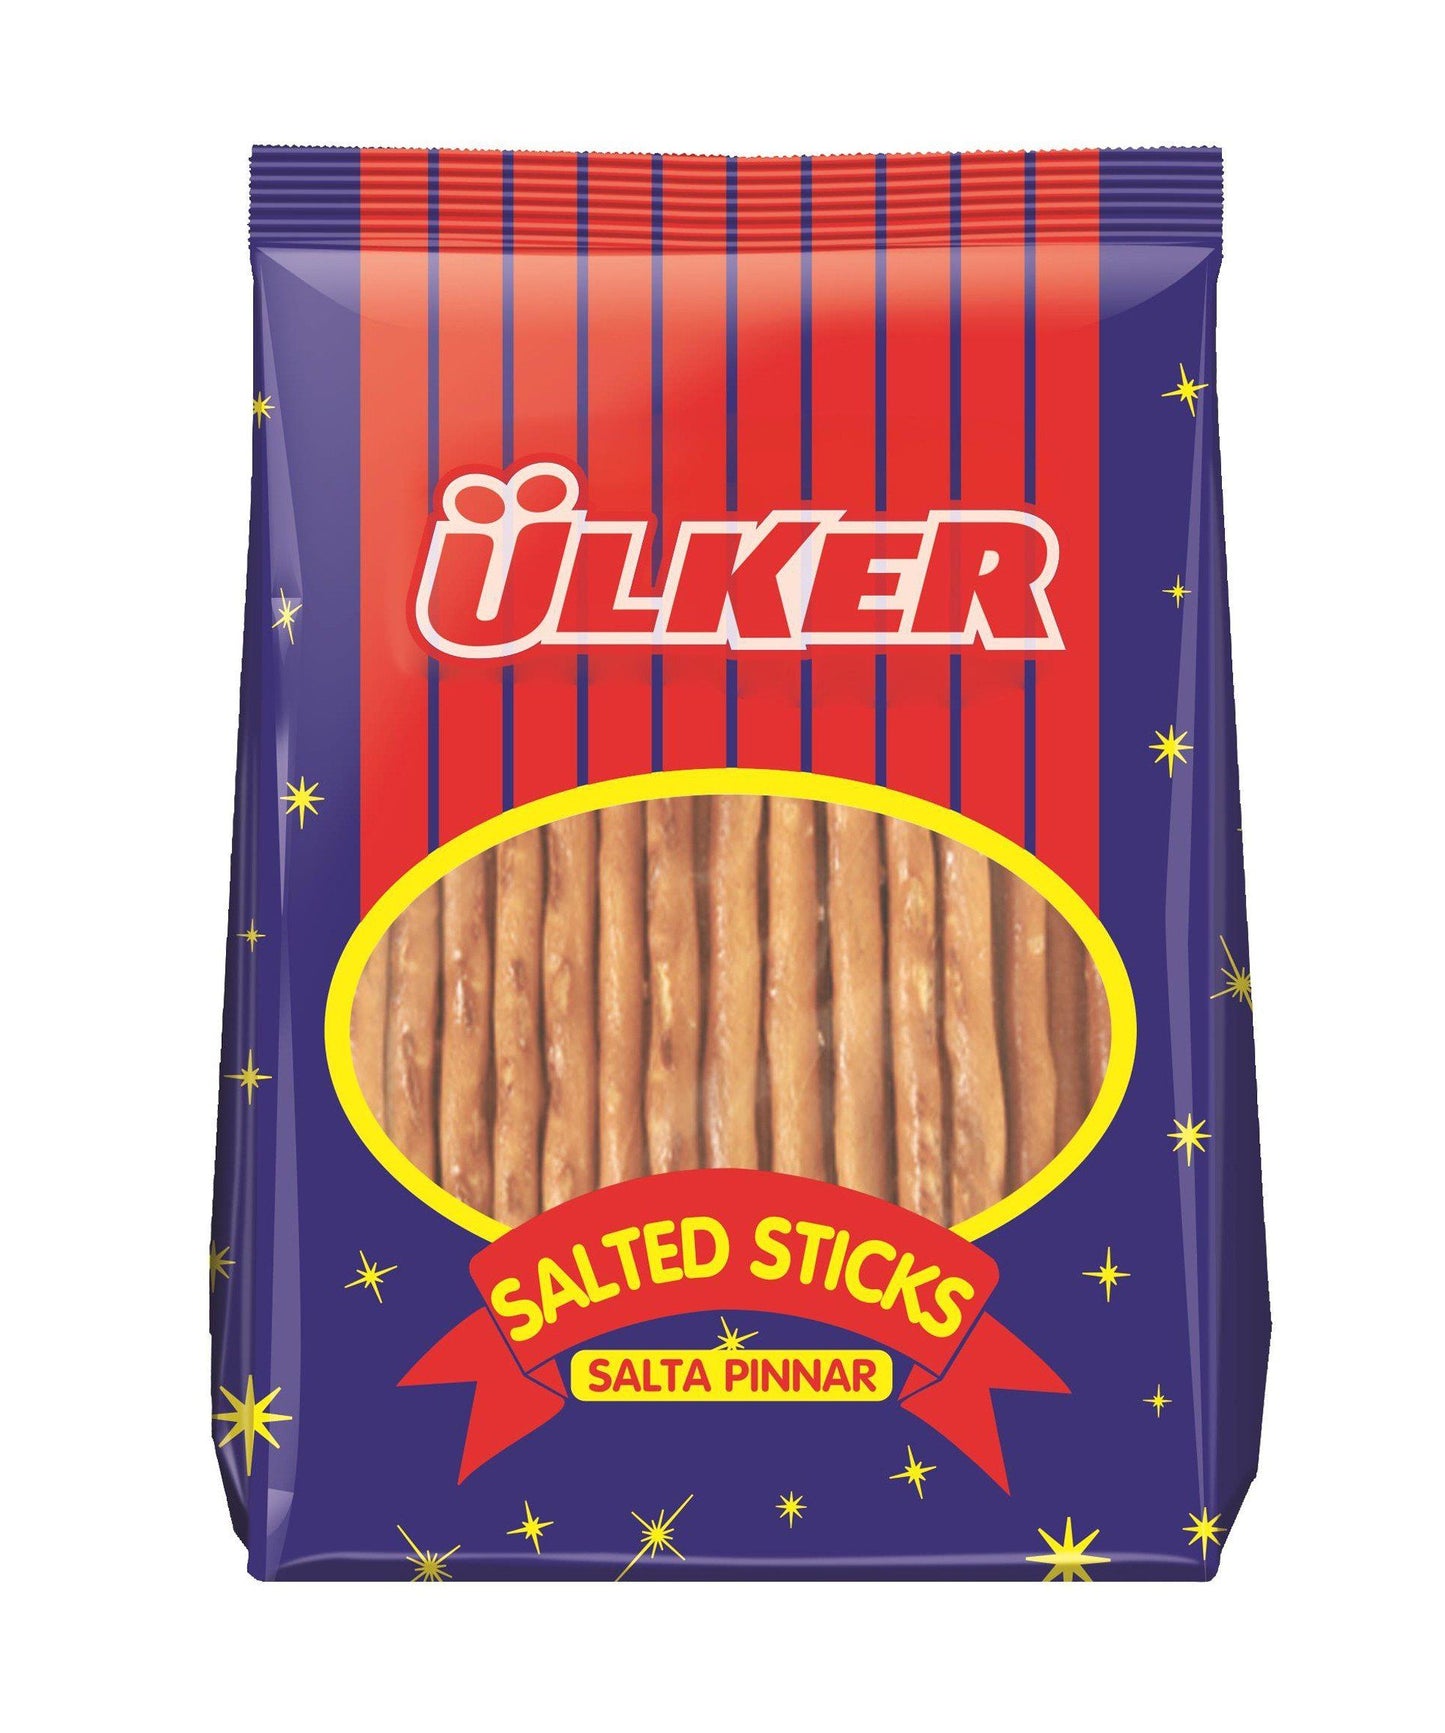 ULKER SALTED STICKS CRACKERS 220g